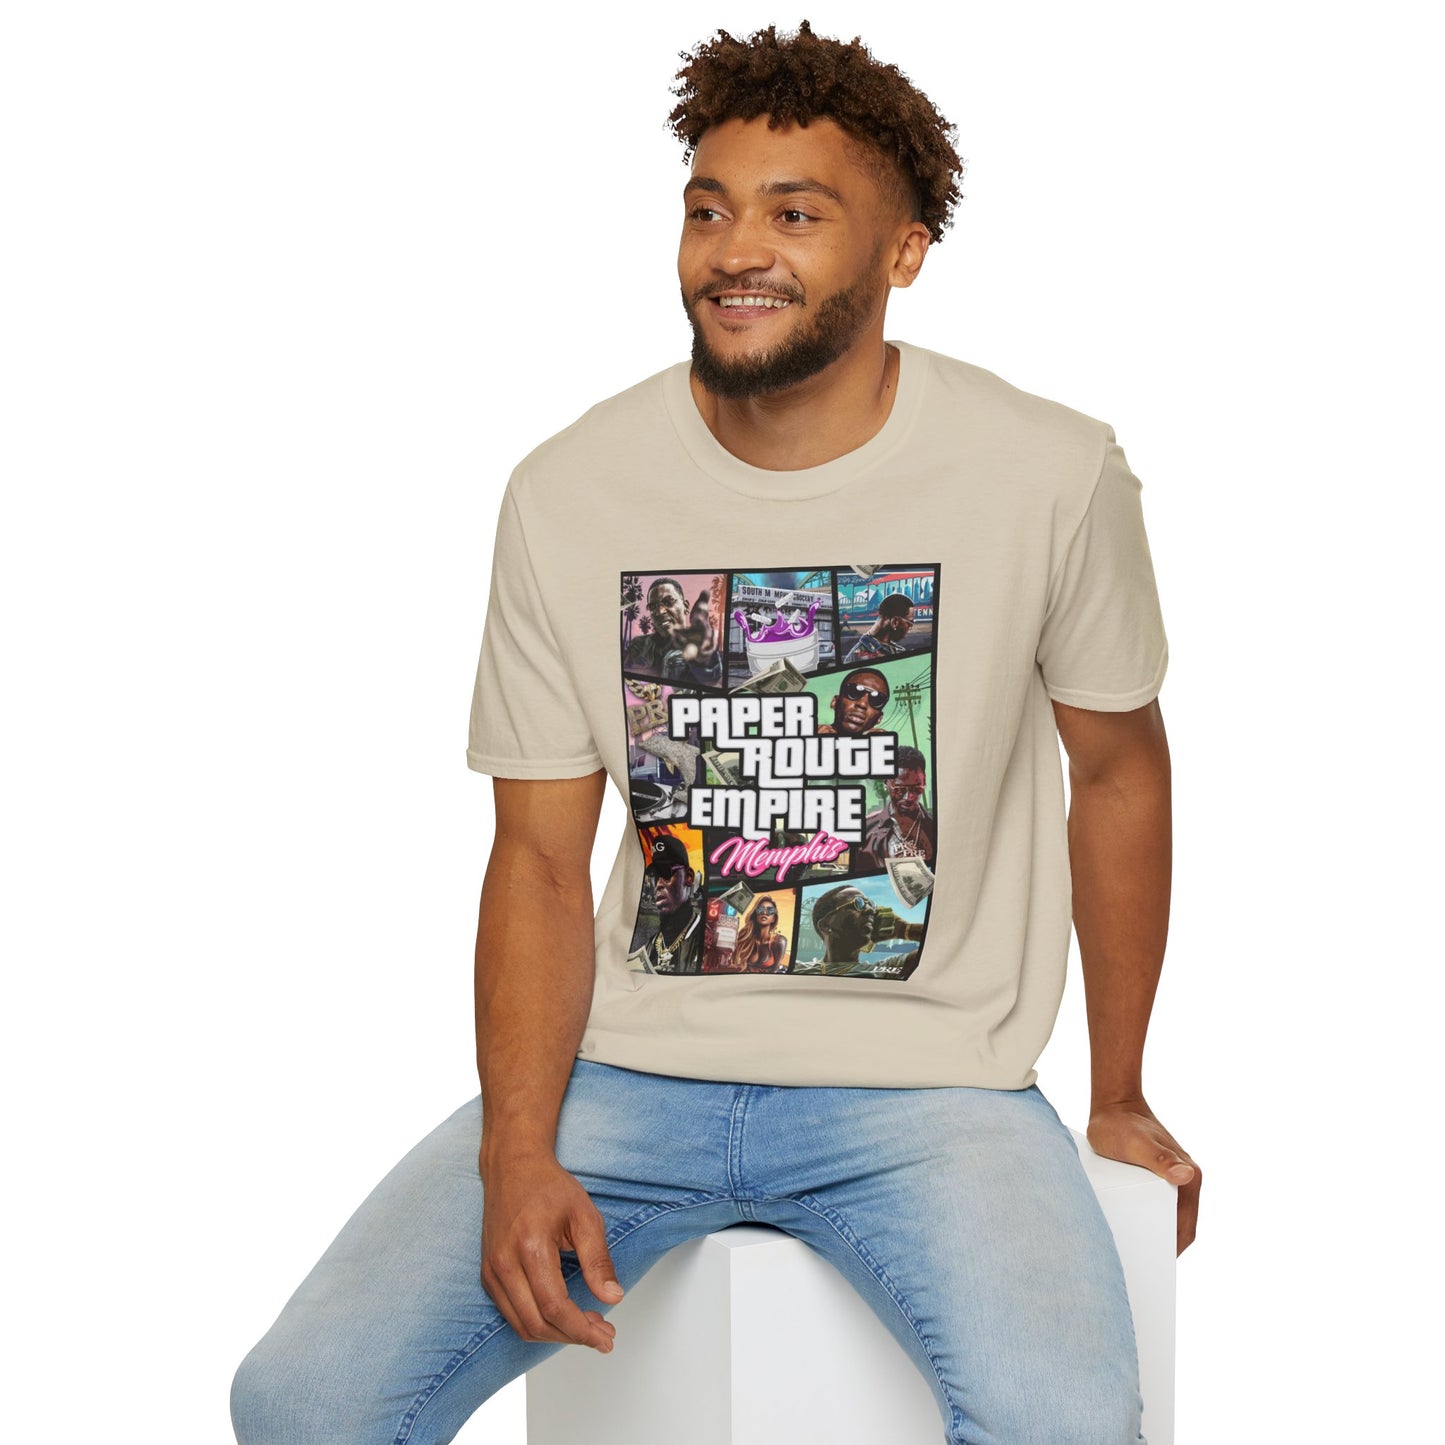 PRE Memphis T-Shirt